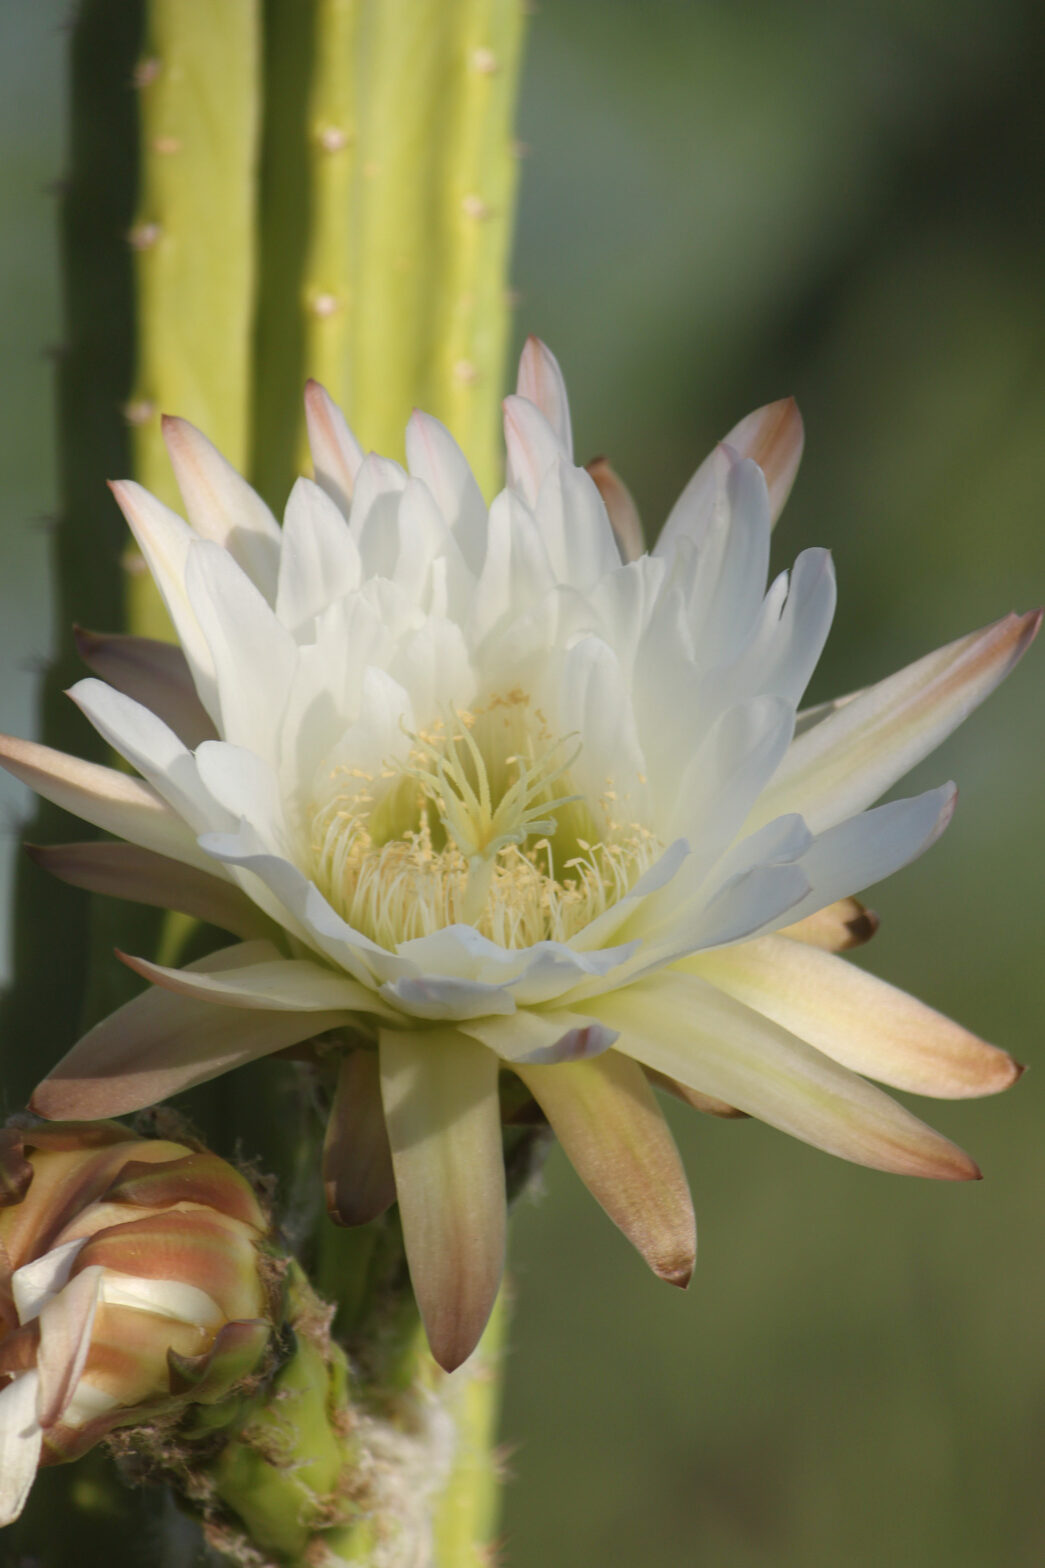 A close-up of a San Pedro bloom.